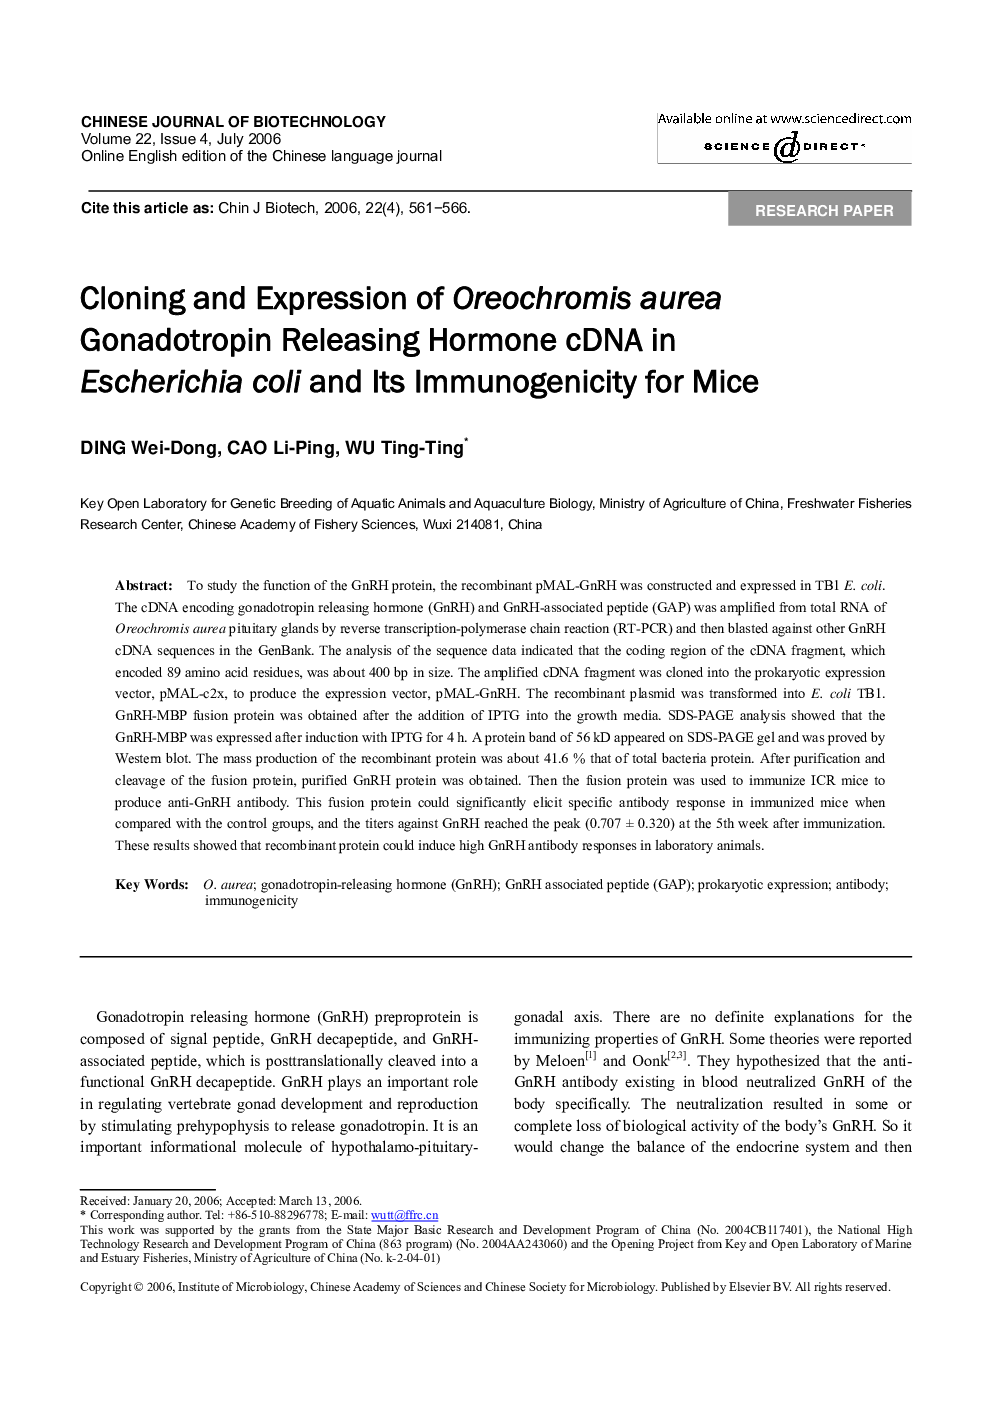 Cloning and Expression of Oreochromis aurea Gonadotropin Releasing Hormone cDNA in Escherichia coli and Its Immunogenicity for Mice